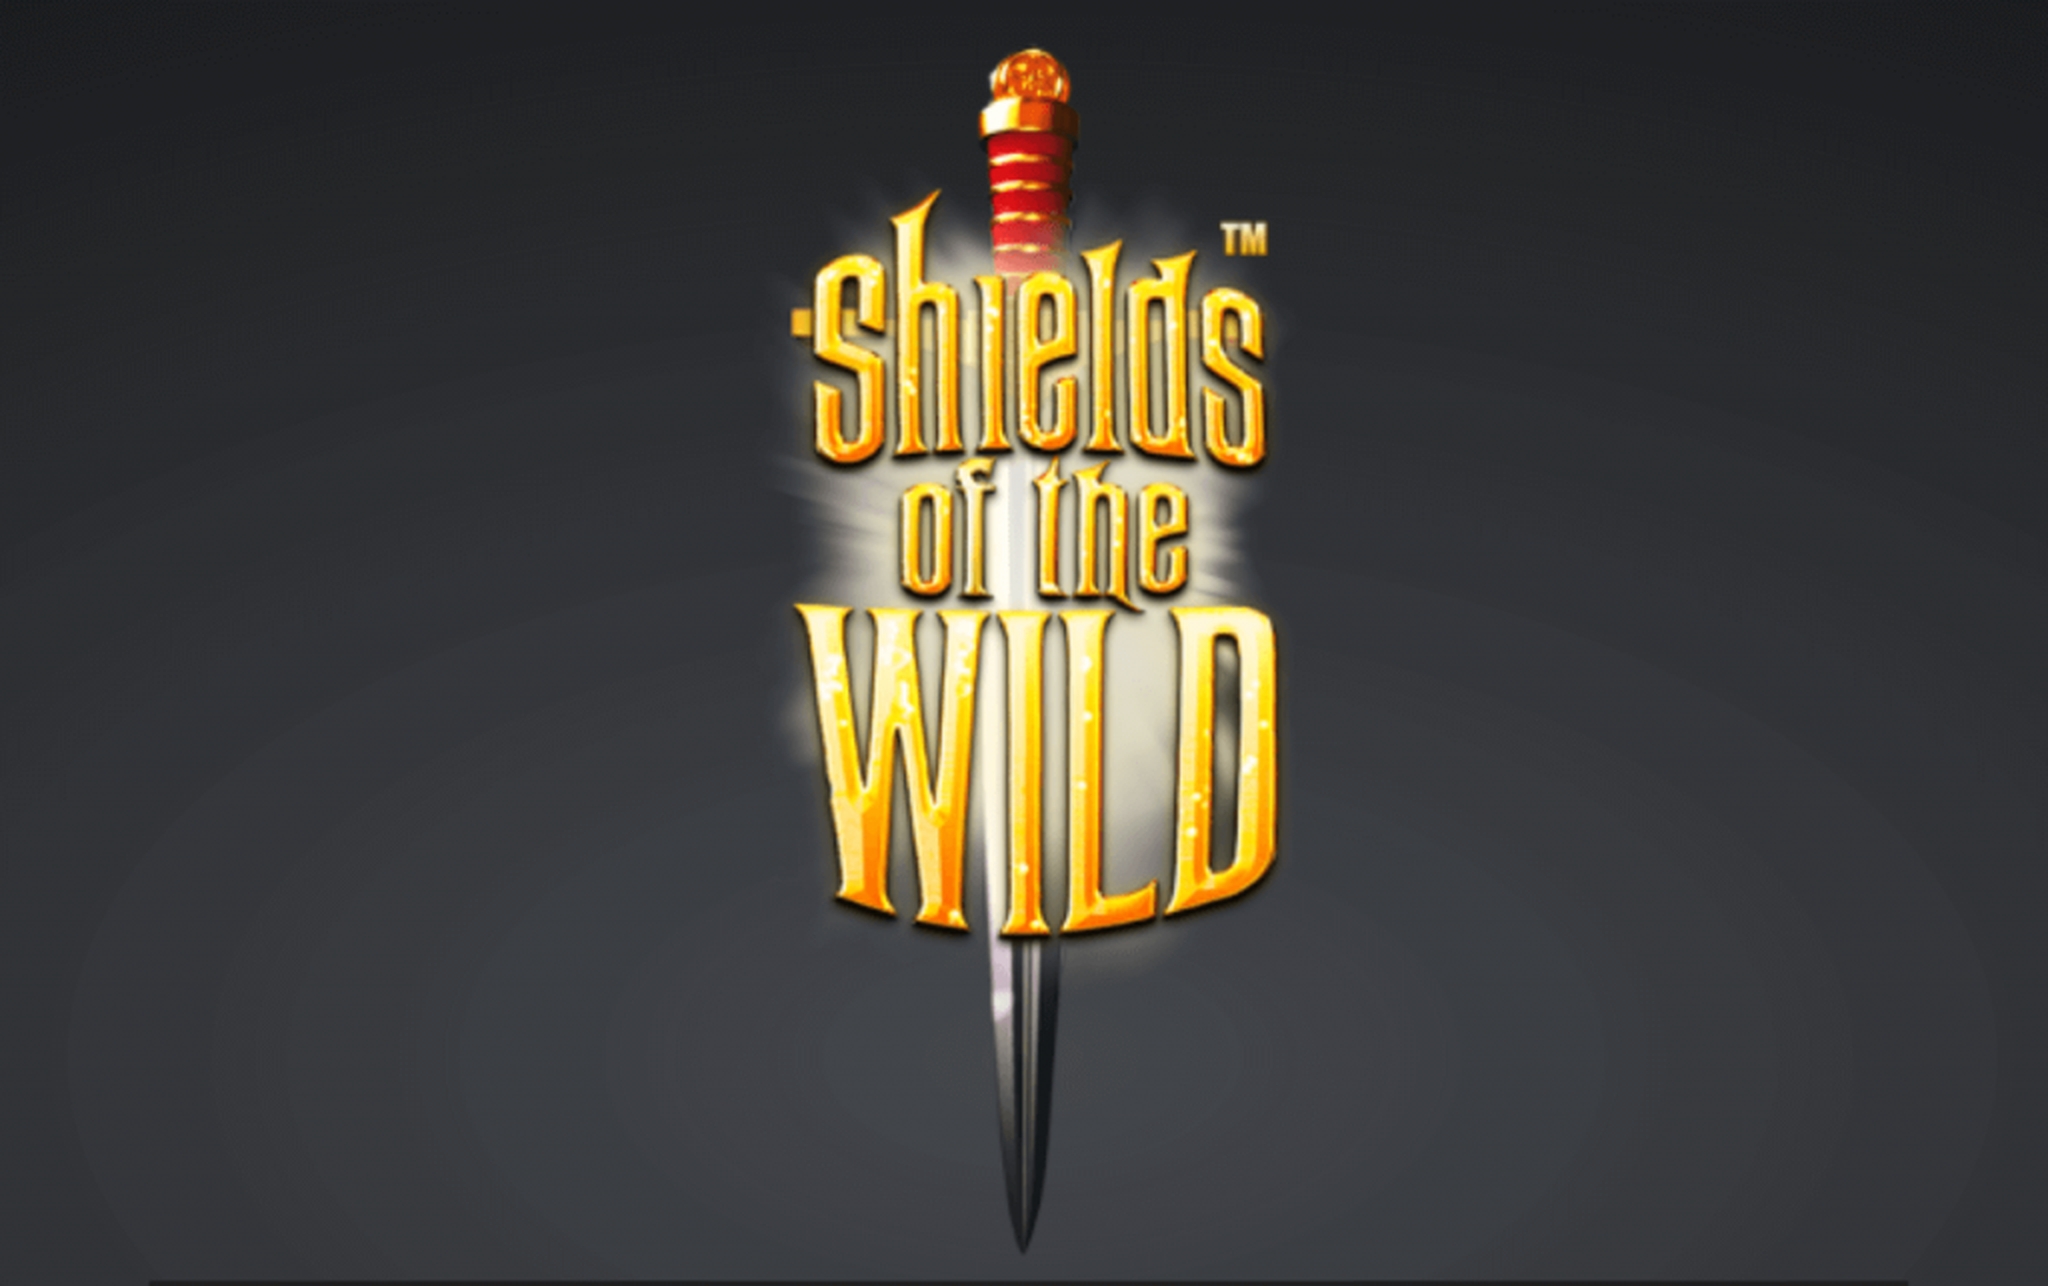 Shields of the Wild demo